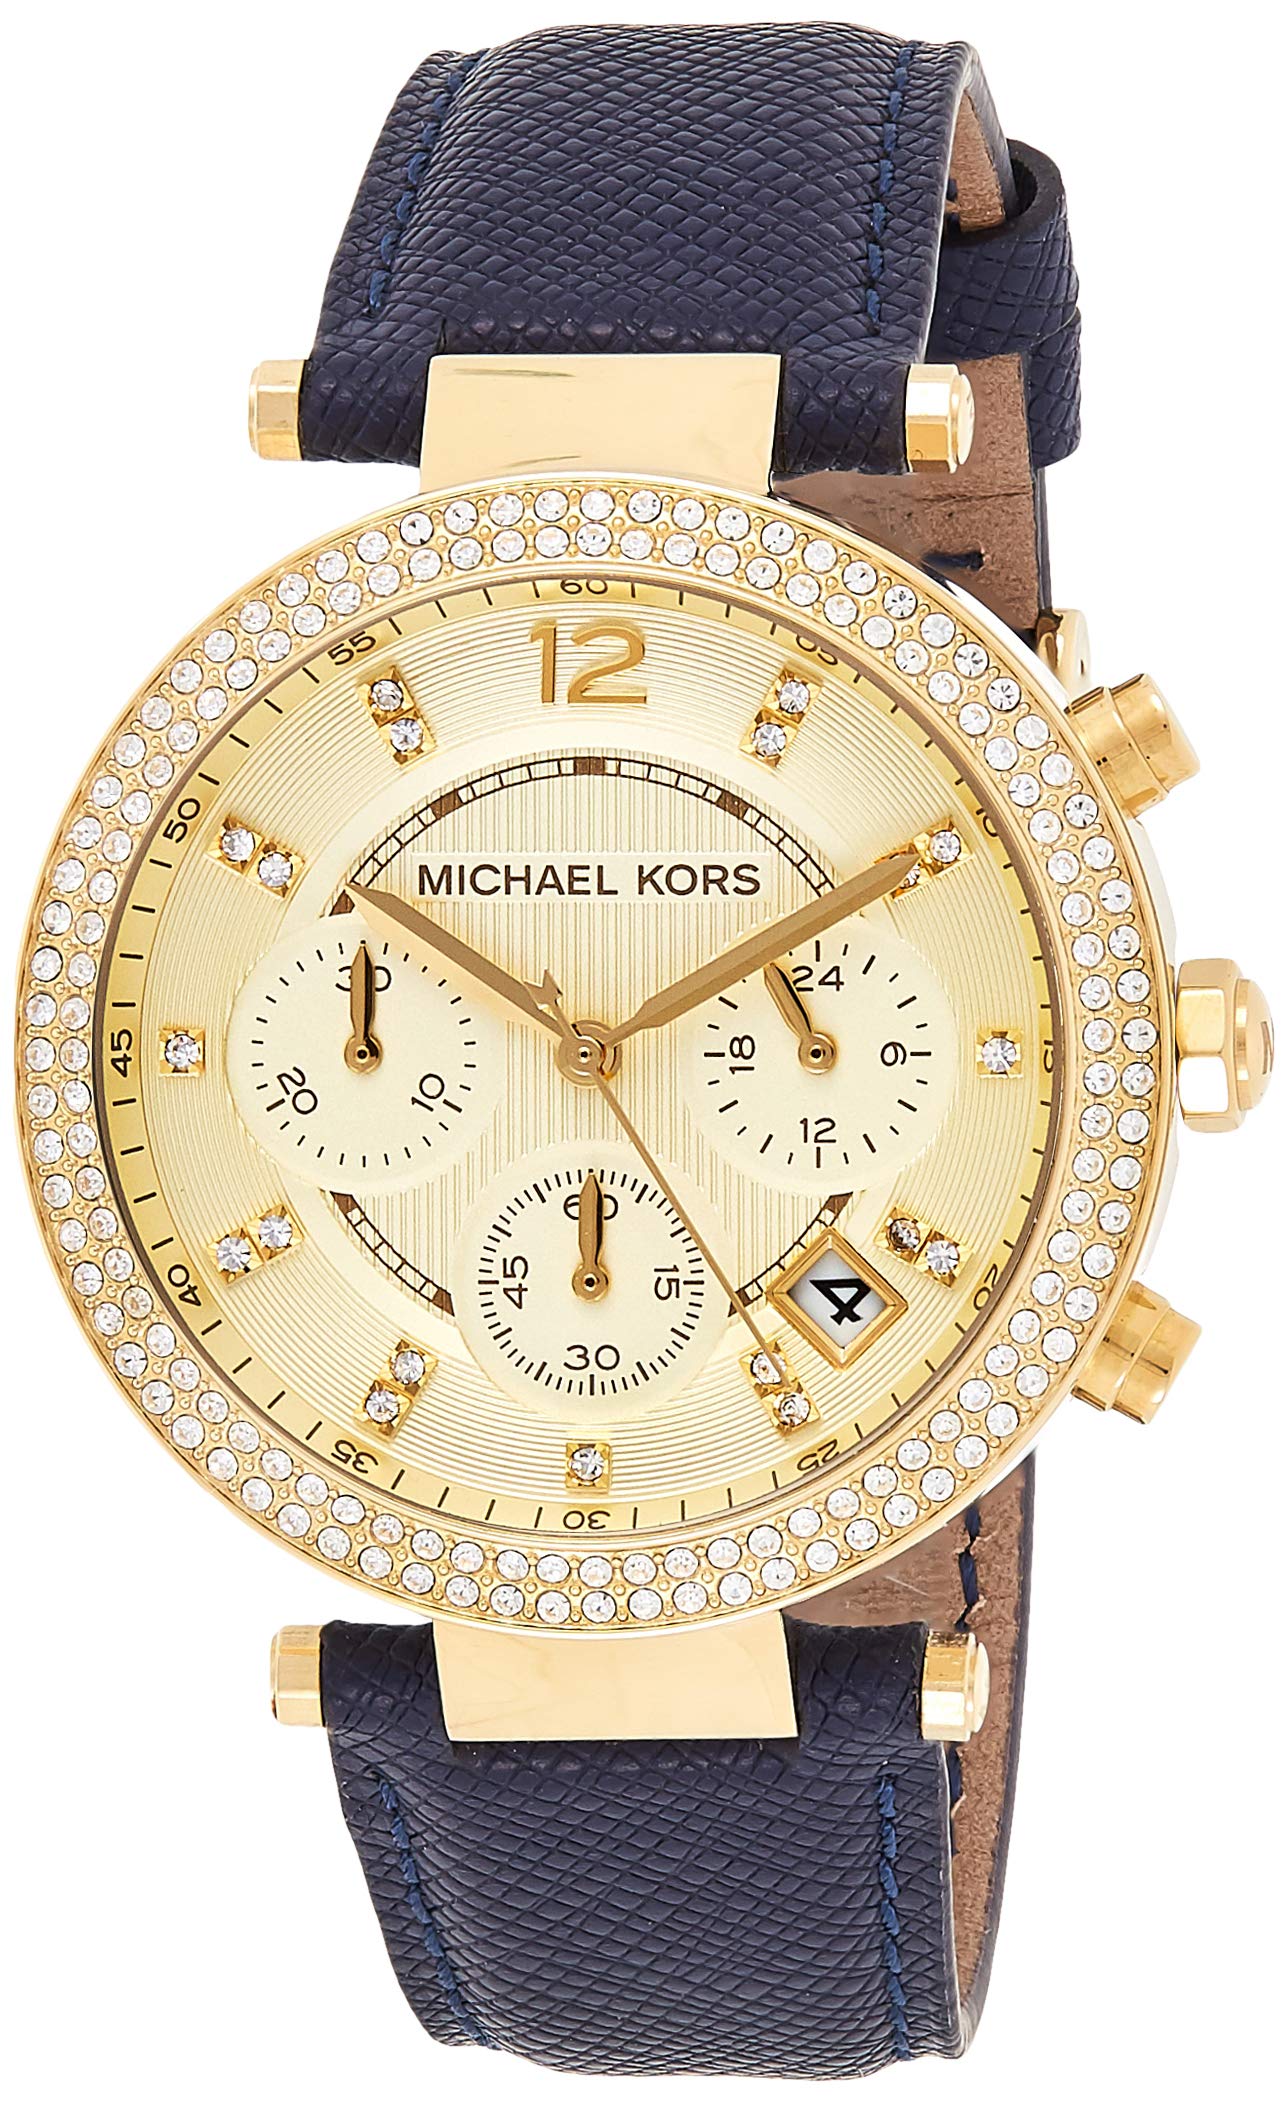 MICHAEL KORS Womens Oversized Dylan Rose Gold Chronograph Watch Blue Dial  Steel  eBay